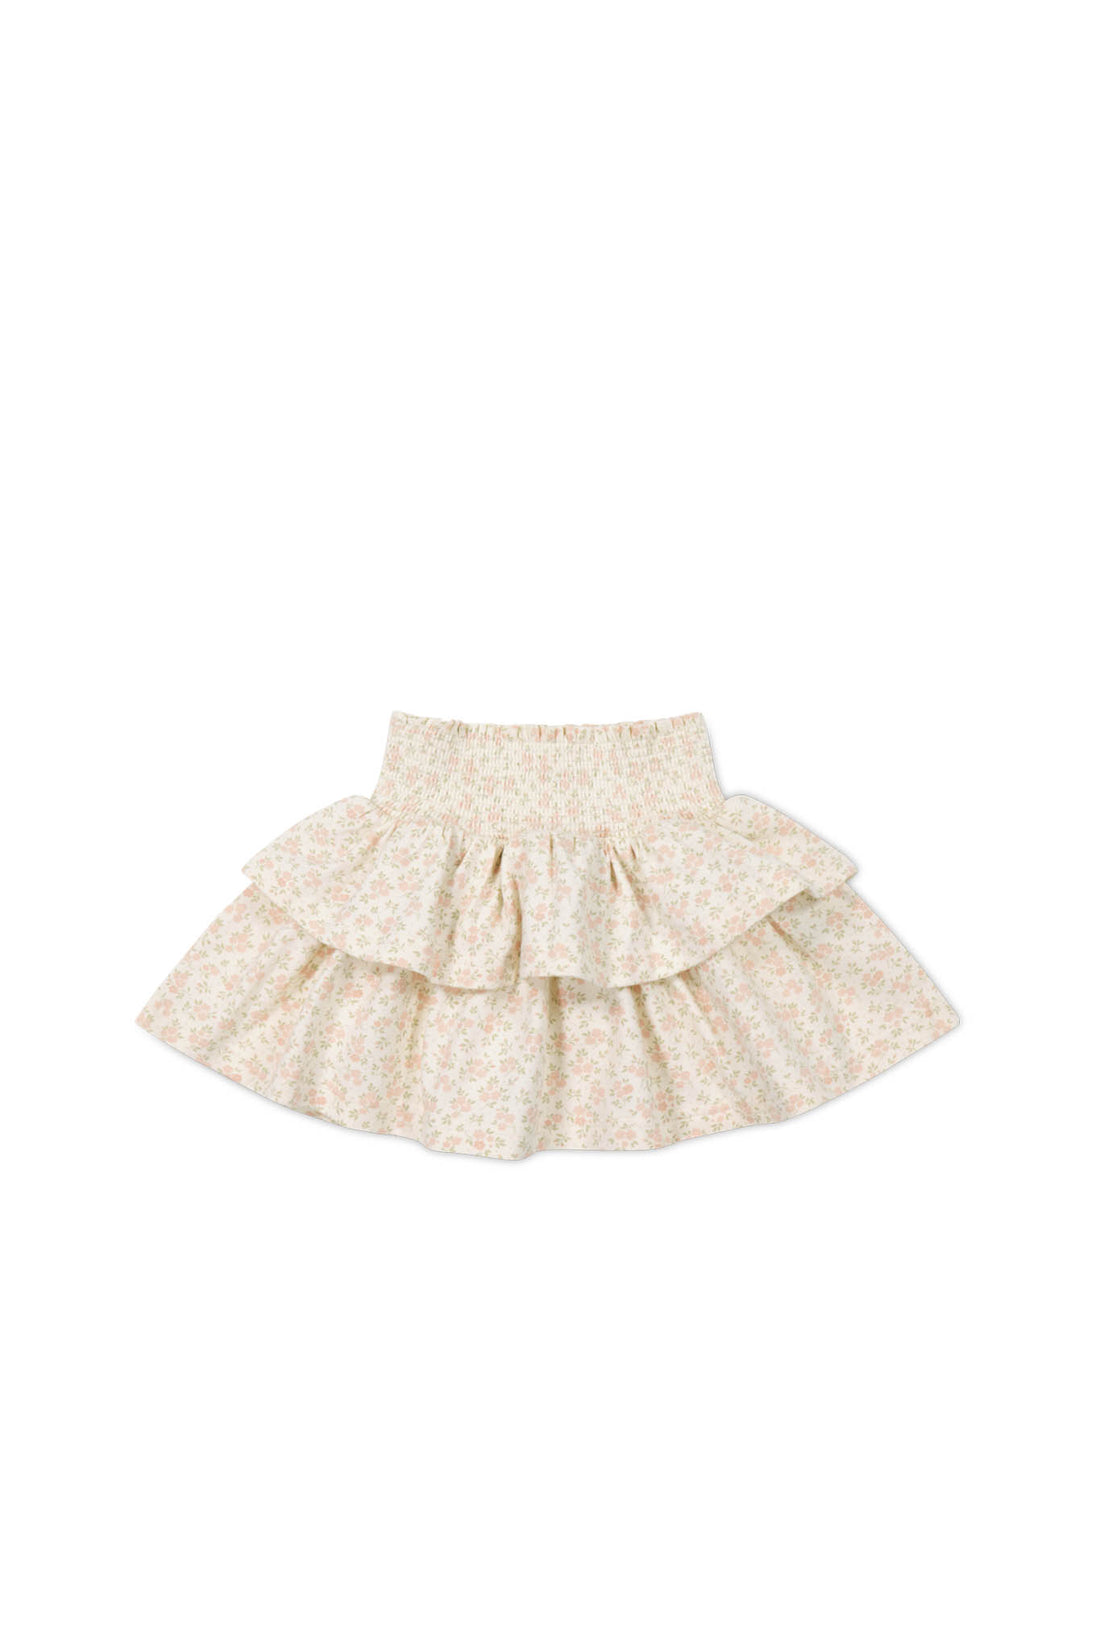 Organic Cotton Ruby Skirt - Rosalie Floral Mauve Childrens Skirt from Jamie Kay NZ